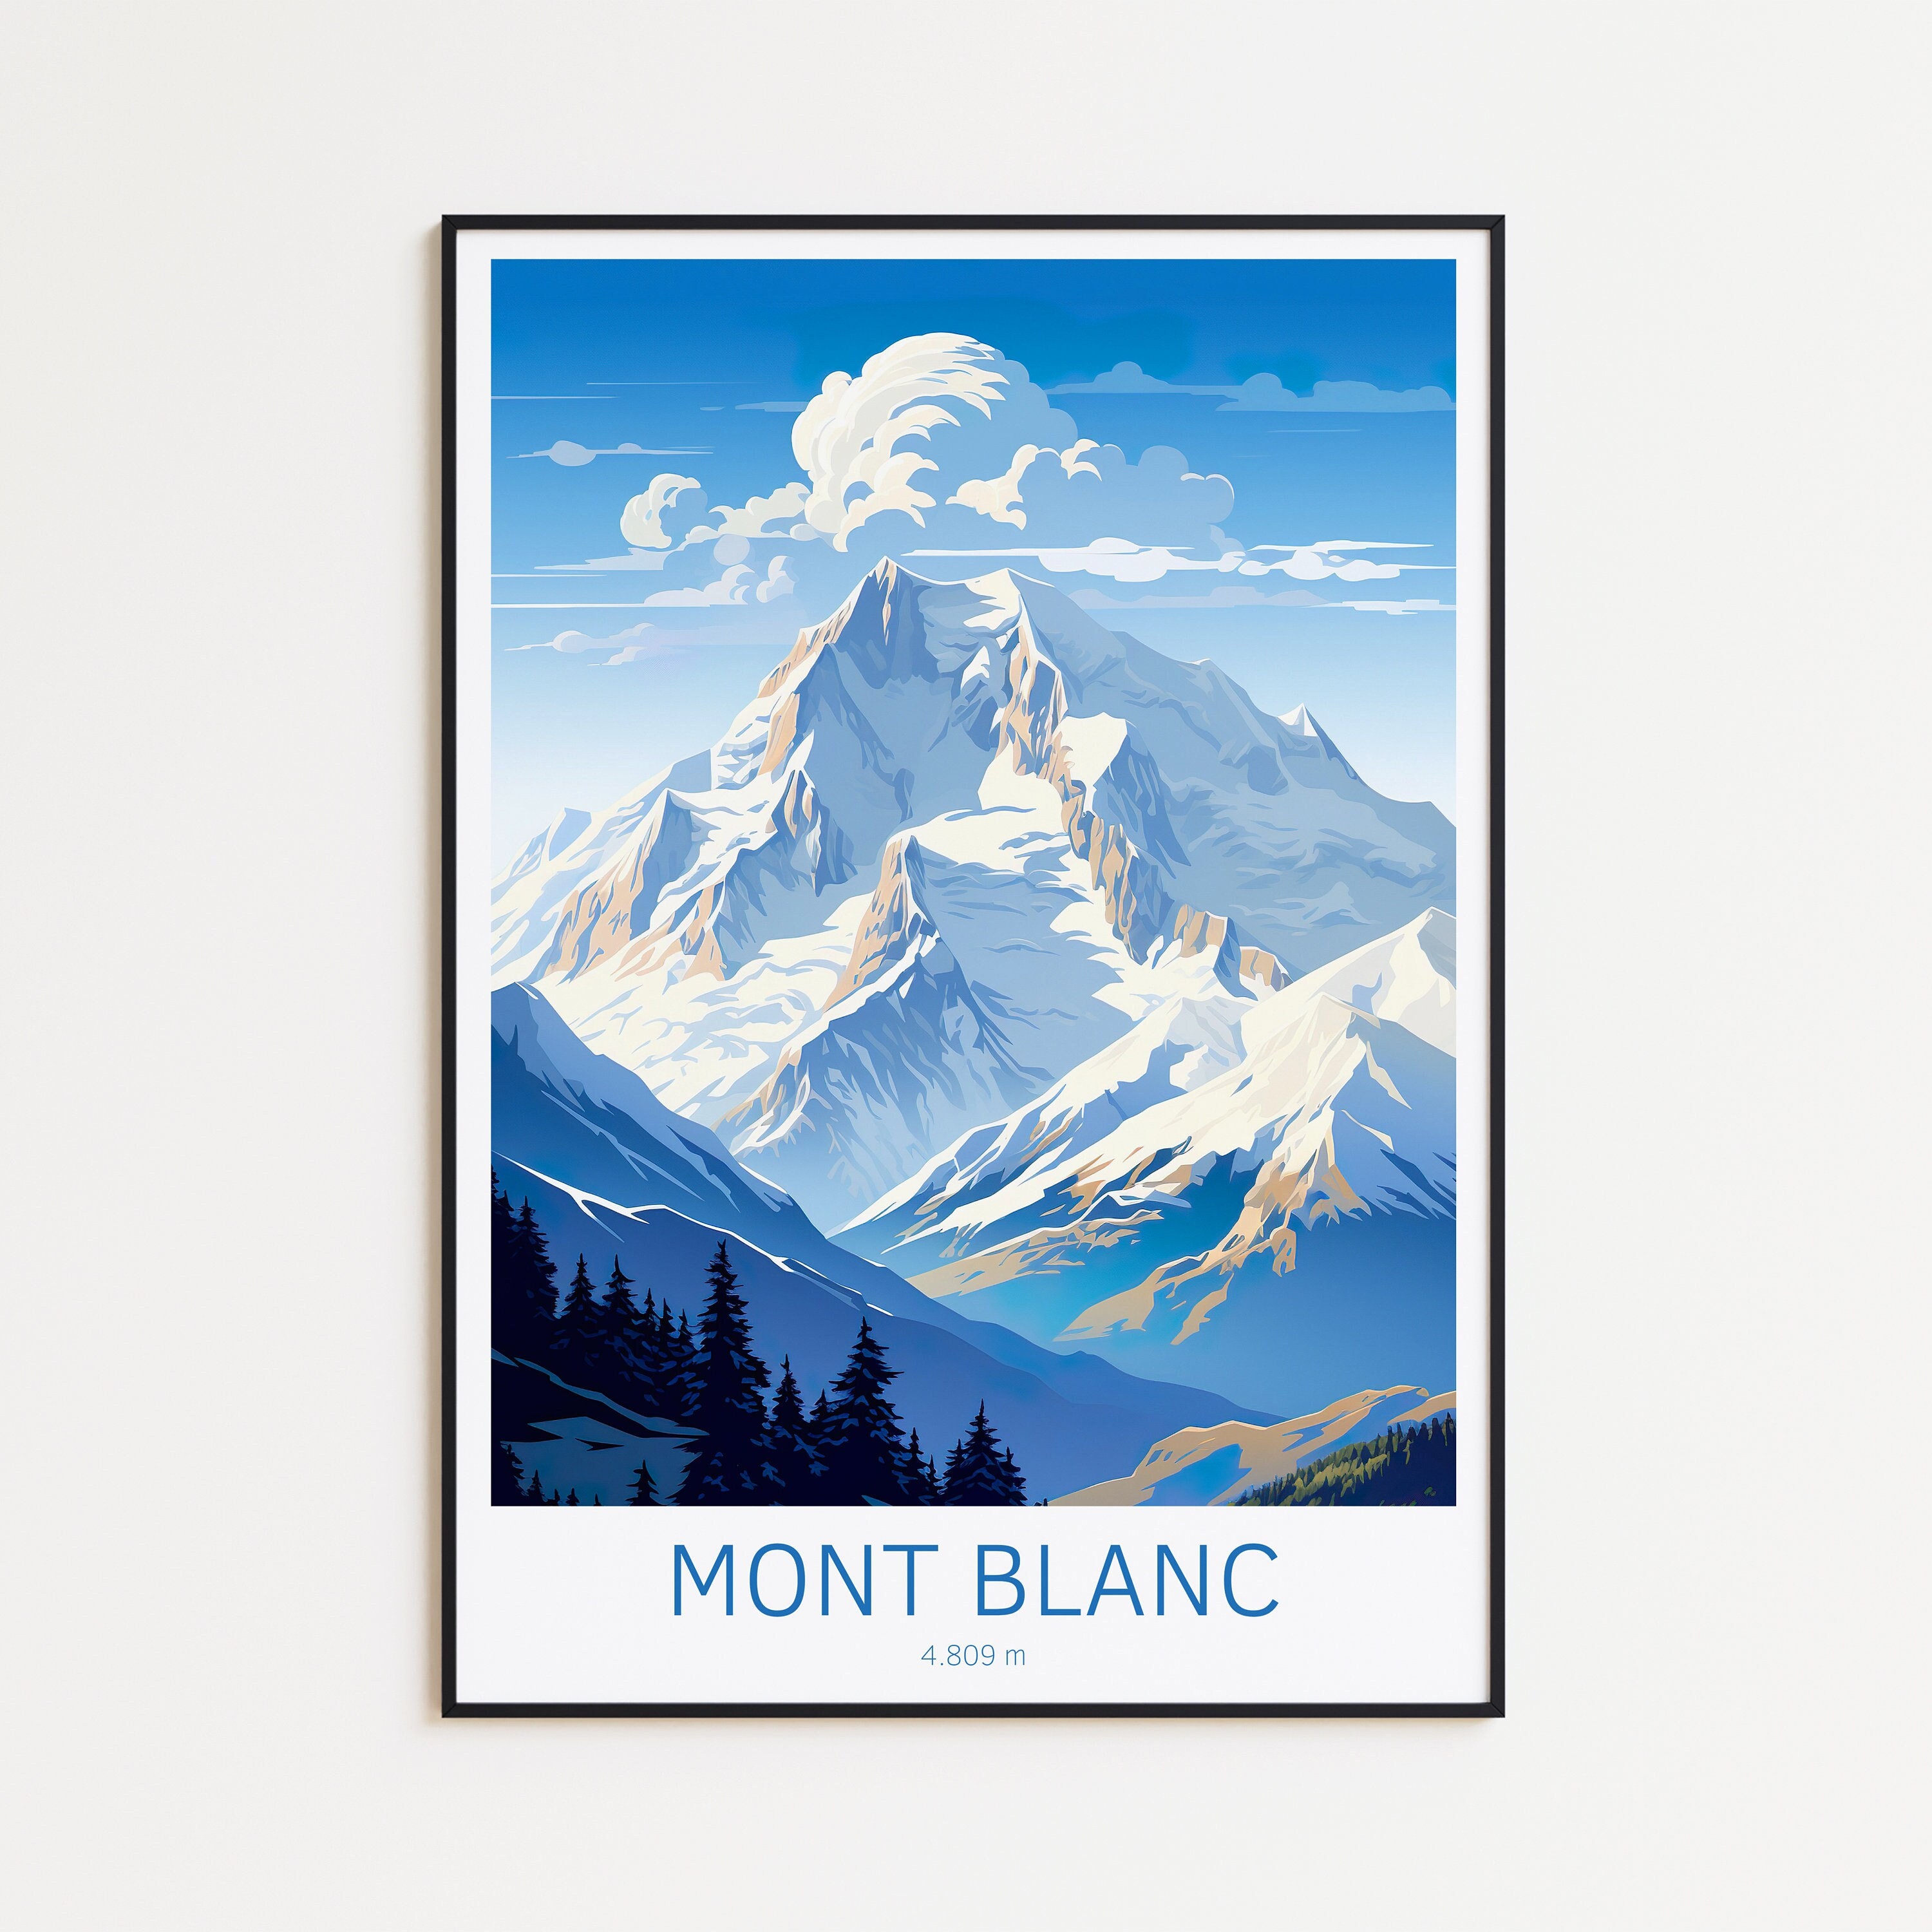 Chamonix Mont Blanc Vintage Travel Poster — MUSEUM OUTLETS